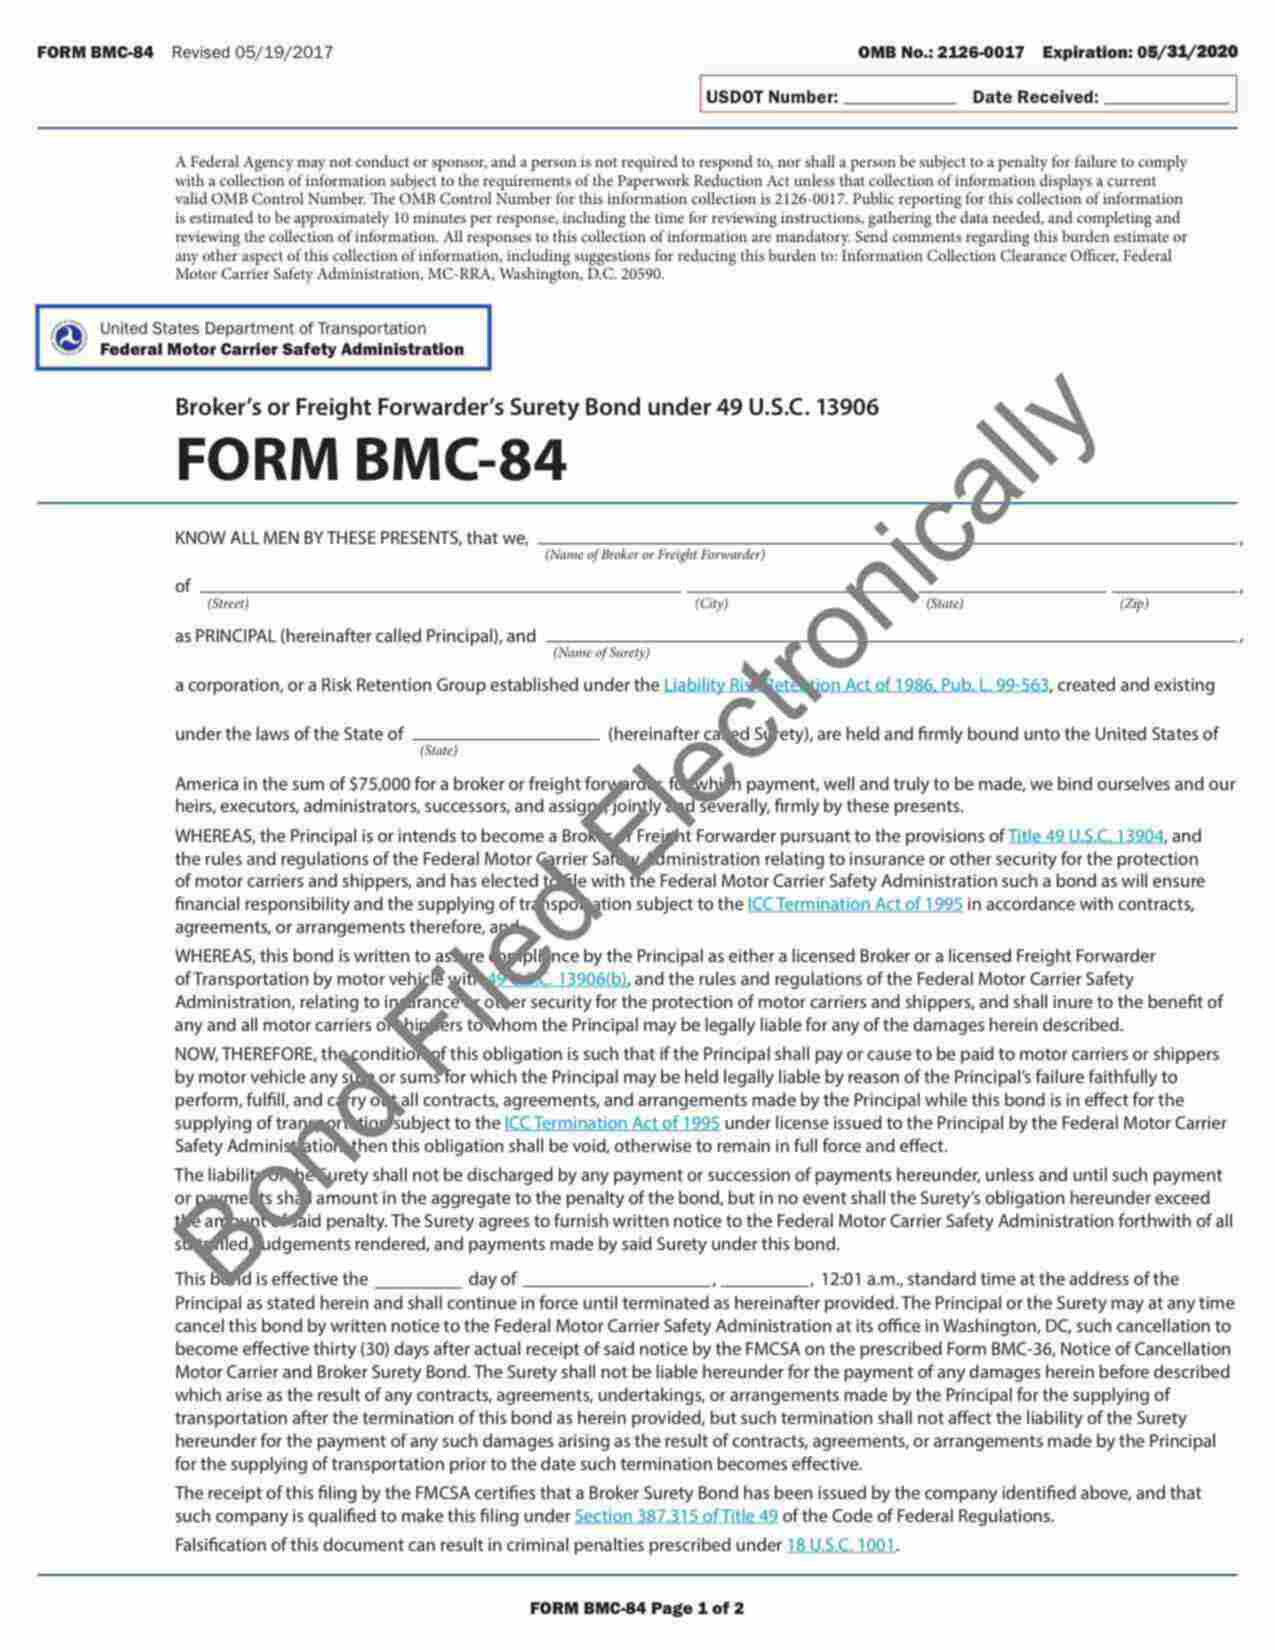 Kansas Property Broker or Freight Forwarder BMC-84 (ICC Broker) Bond Form